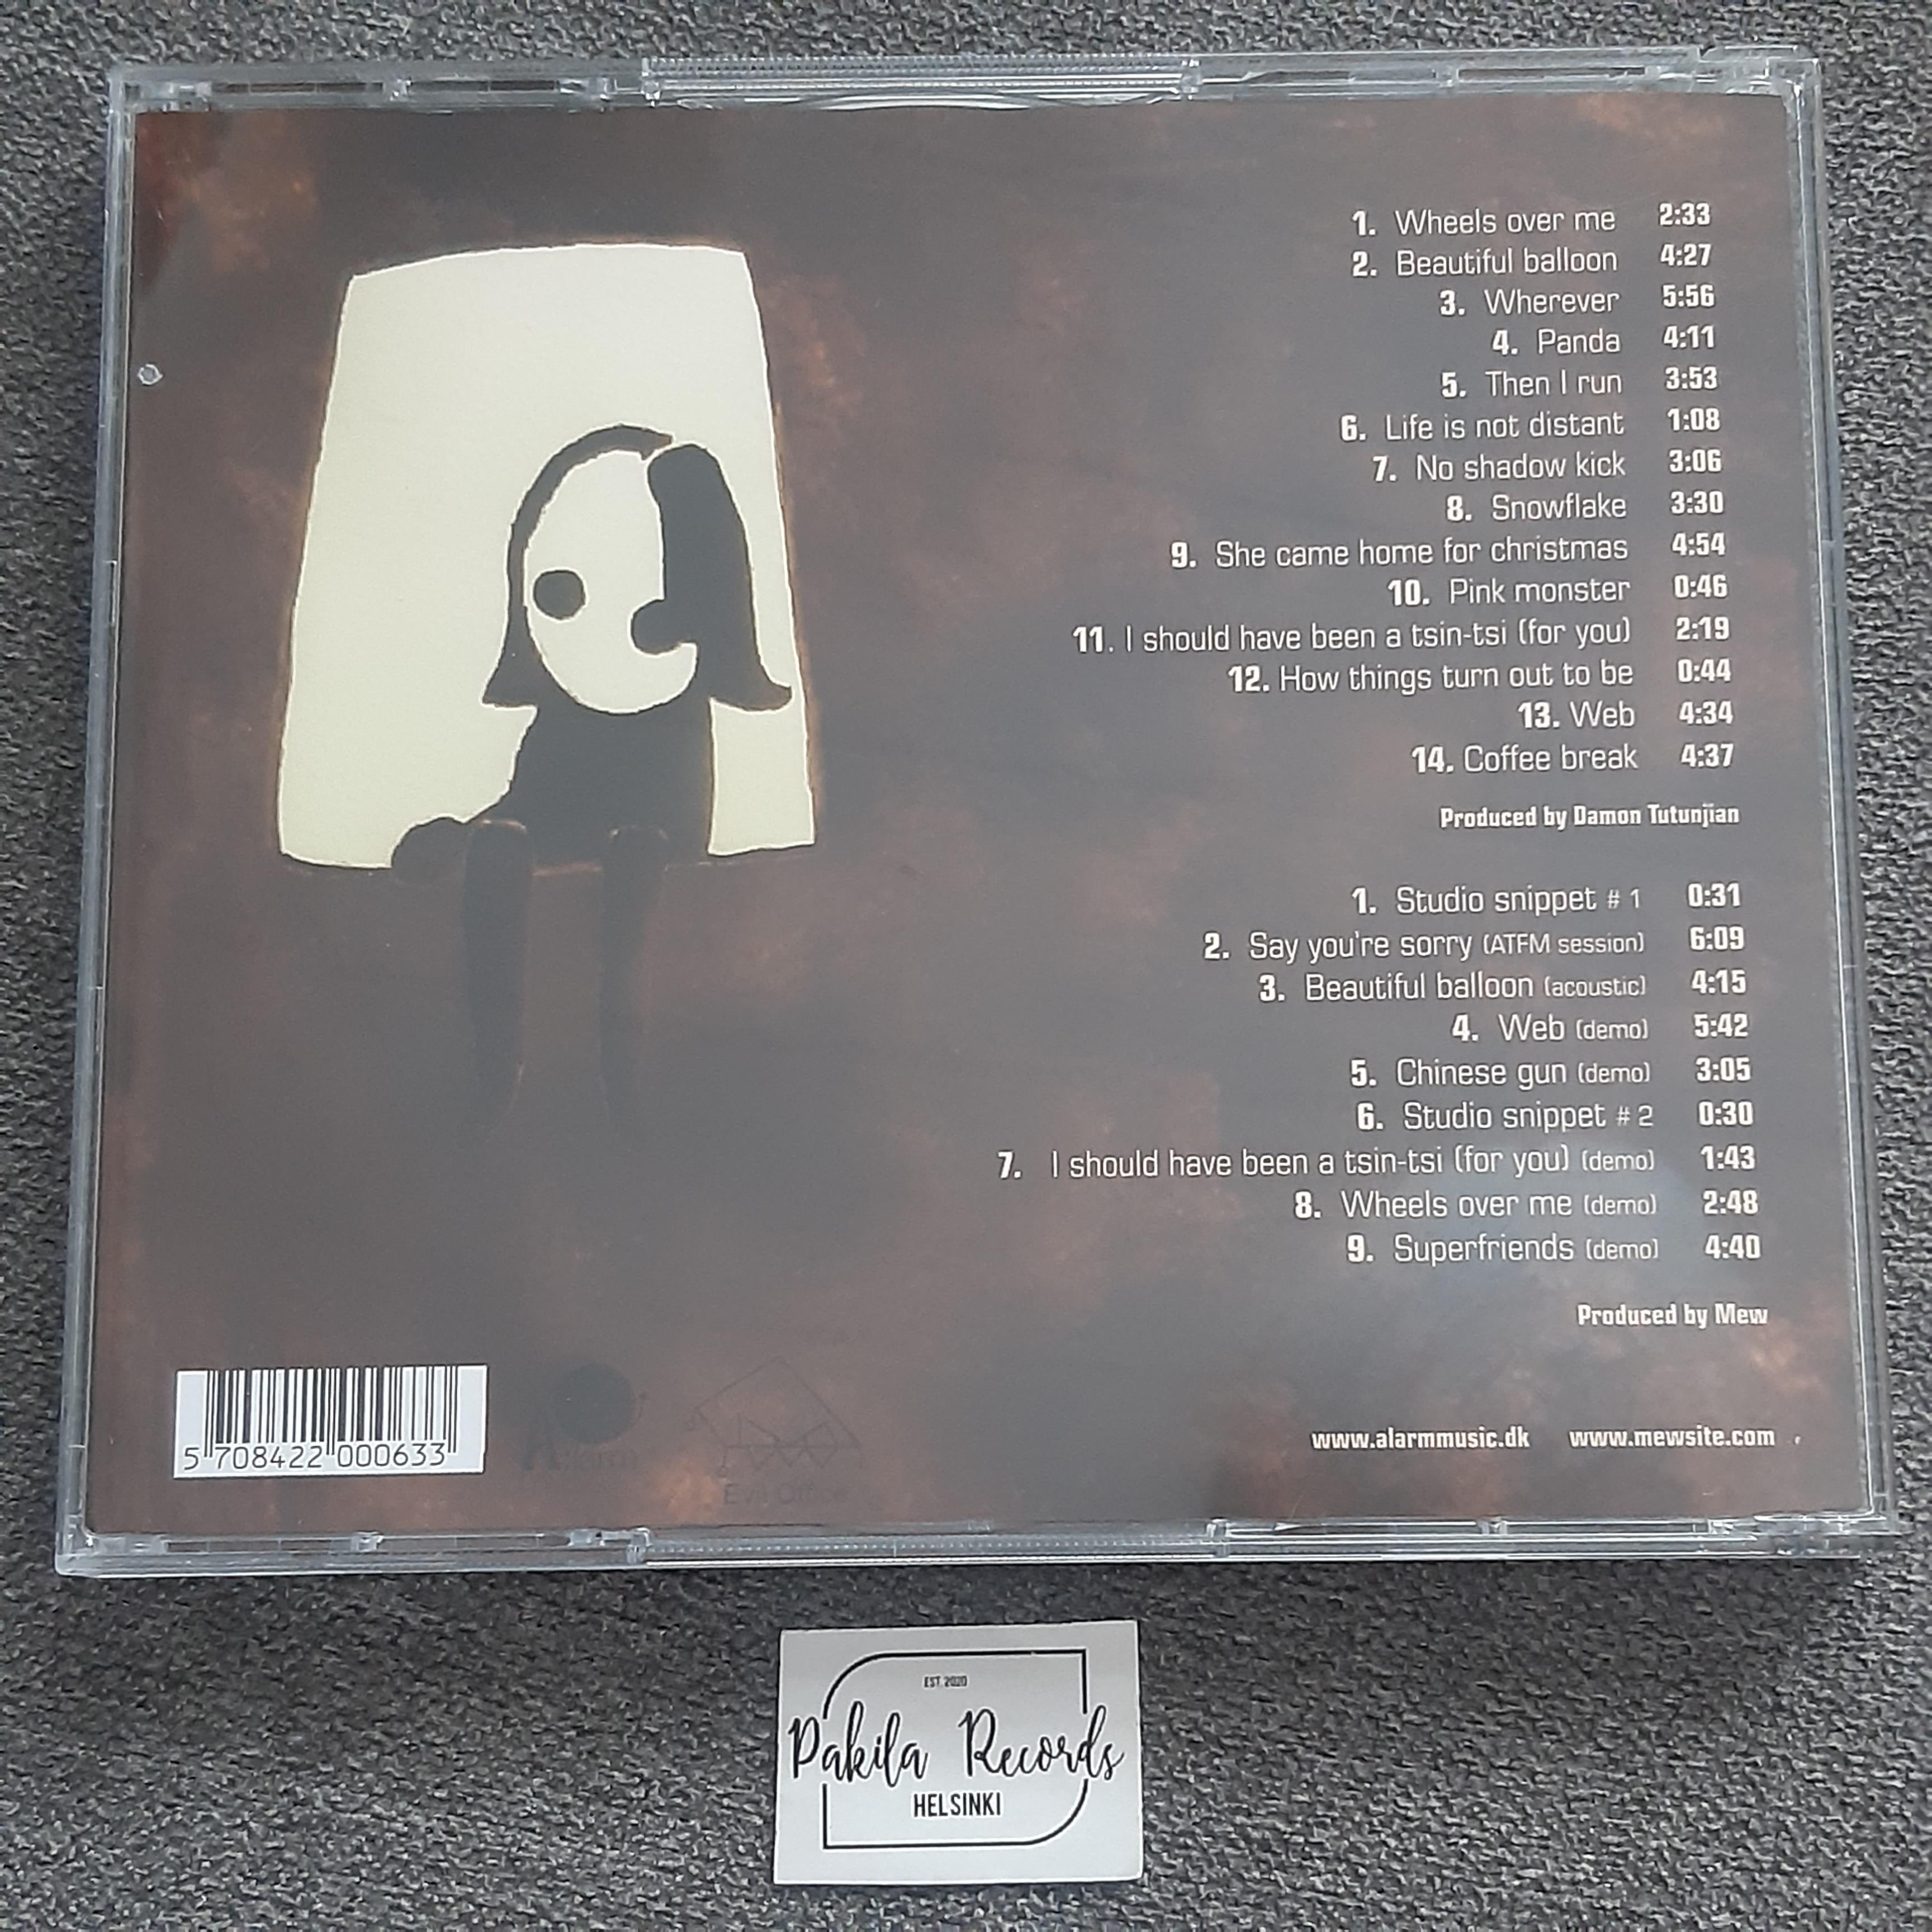 Mew - A Triumph For Man - 2 CD (käytetty)